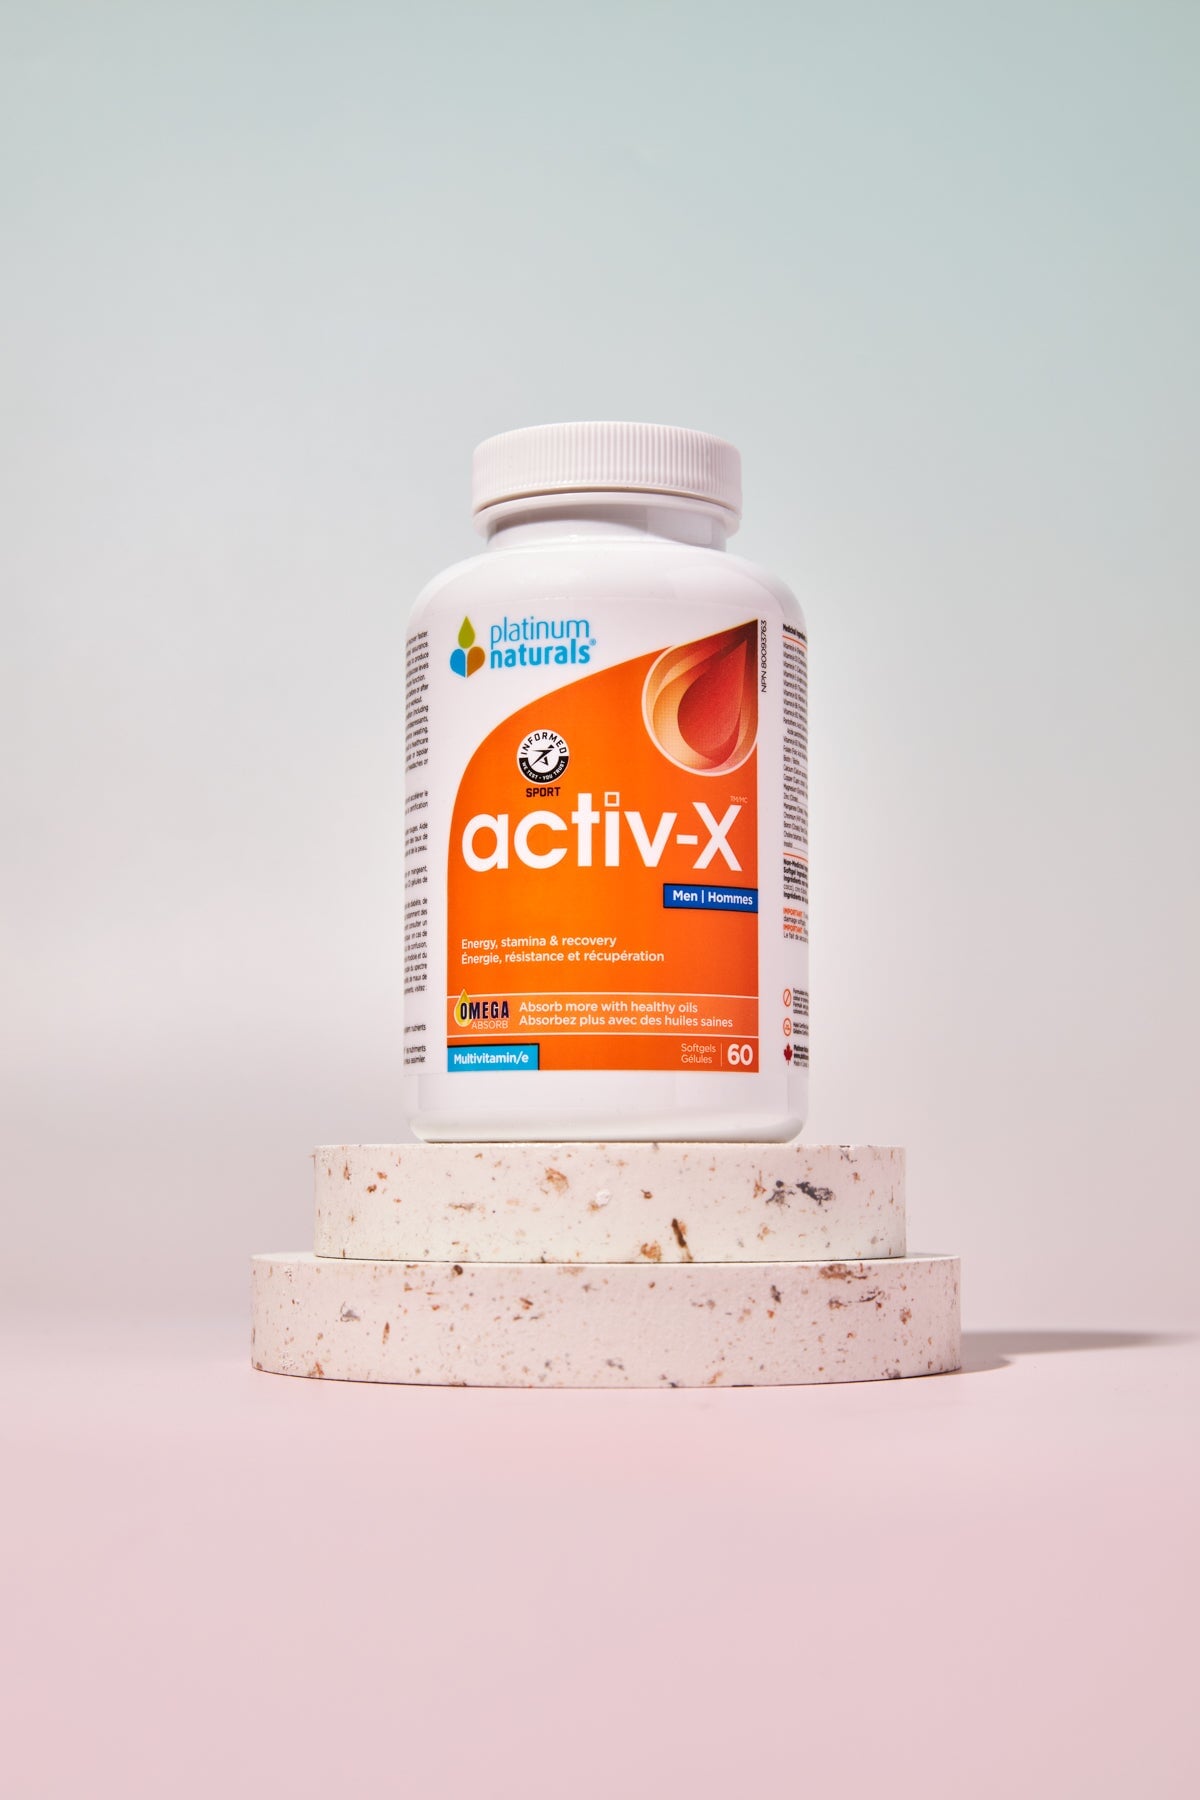 activ-X for Men, Active Lifestyle Supplements